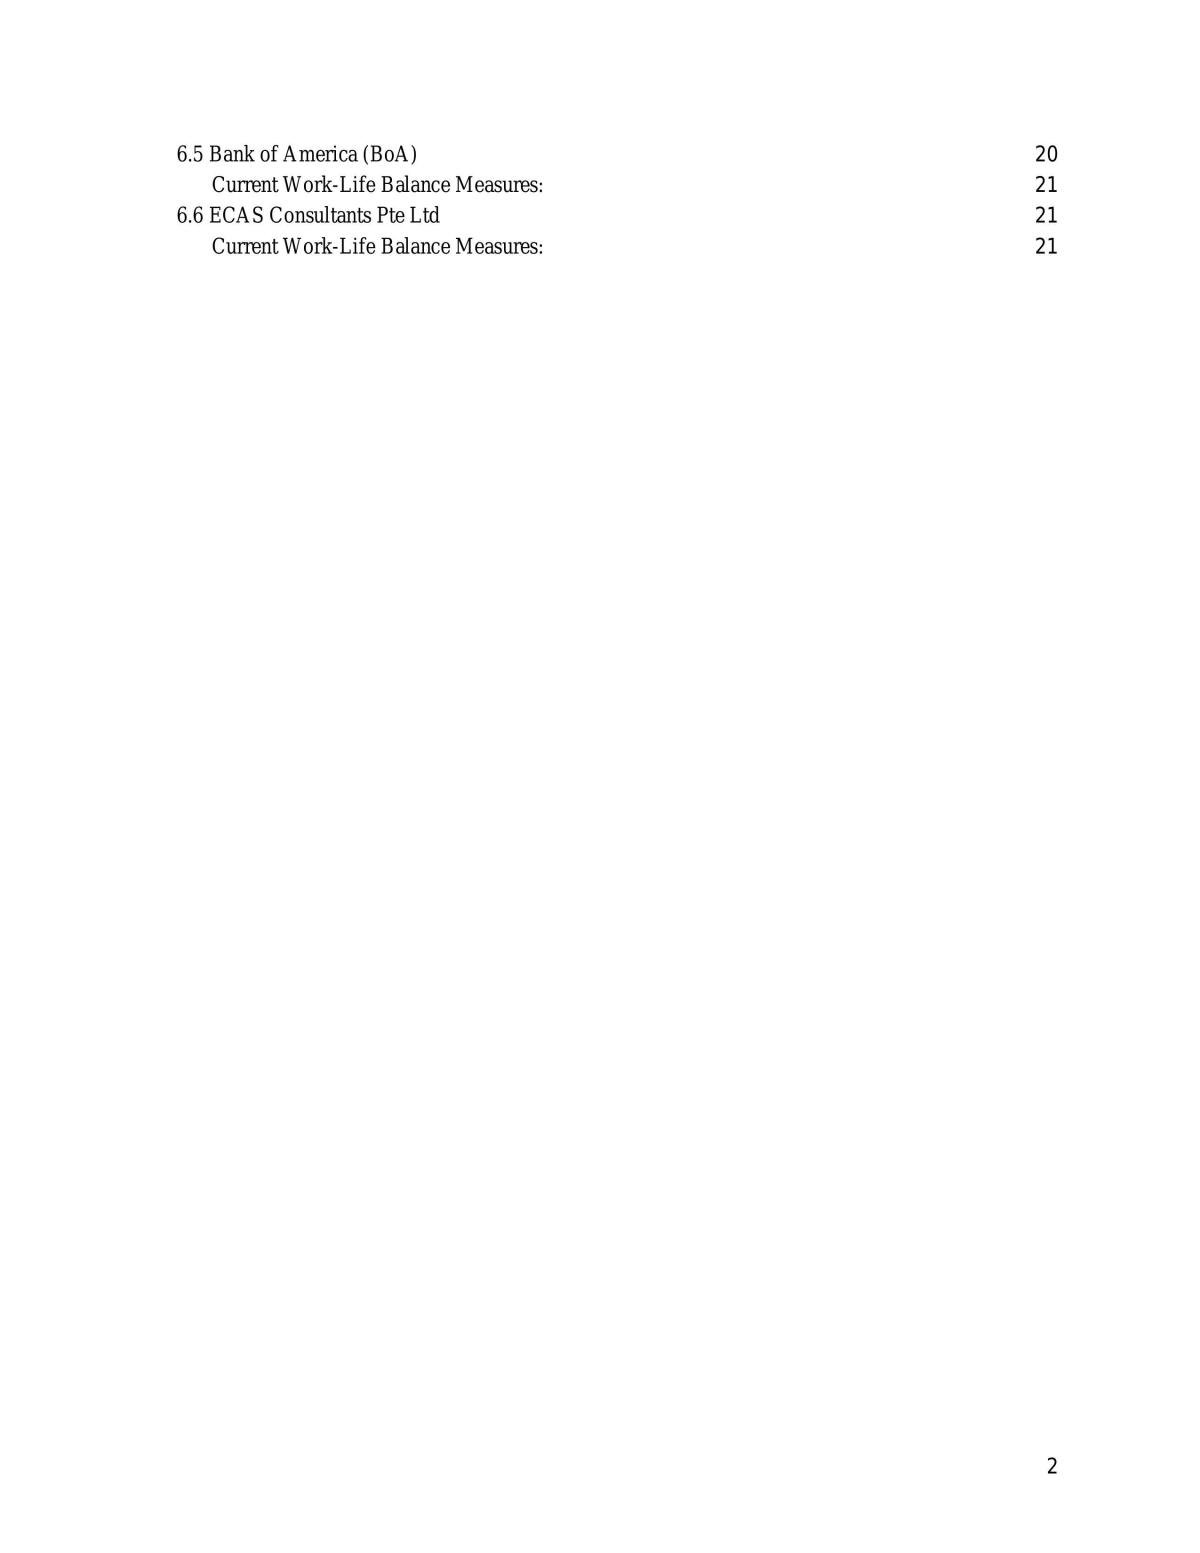 MNO1706 - Project Written Report Work Life Balance - Page 3